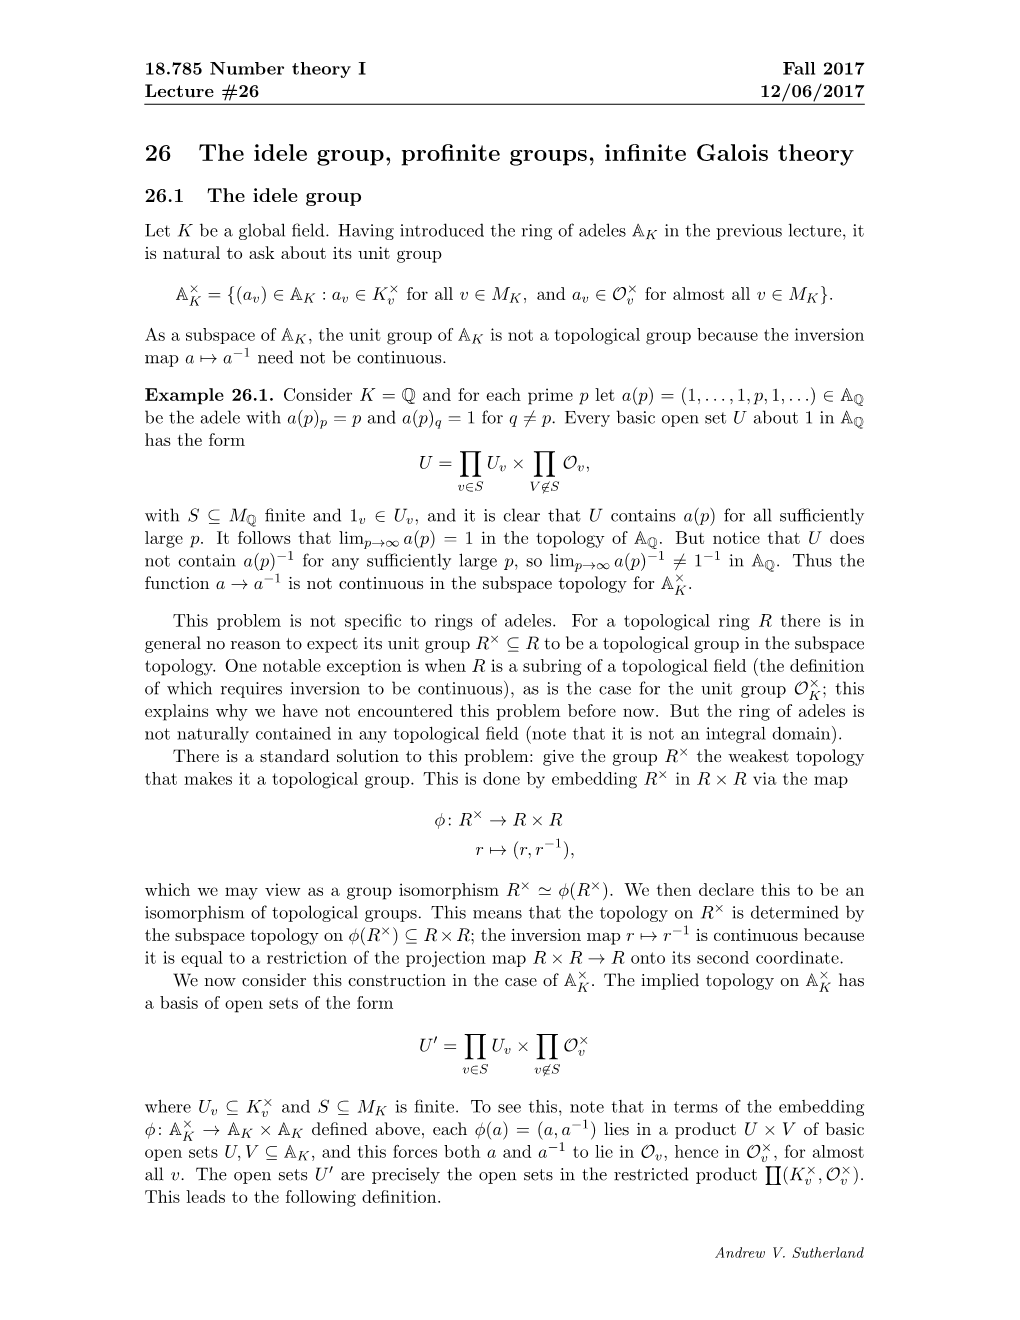 26 the Idele Group, Profinite Groups, Infinite Galois Theory